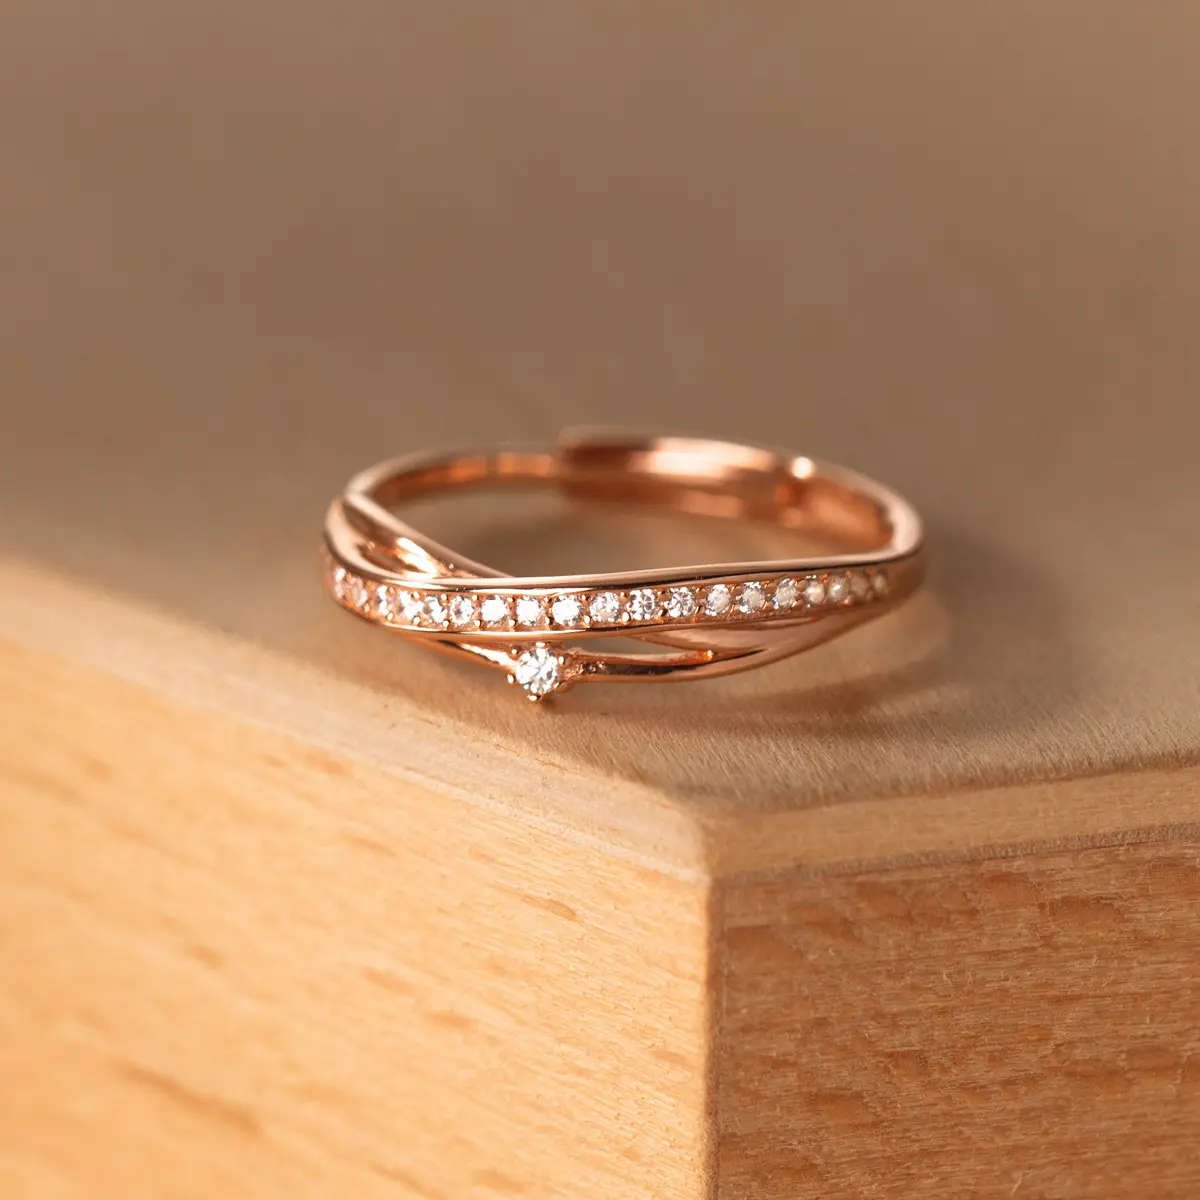 Unique Fashion Stylish Design 925 Sterling Silver CZ Overlap Line S925 Finger Ring Jewelry Women R00905